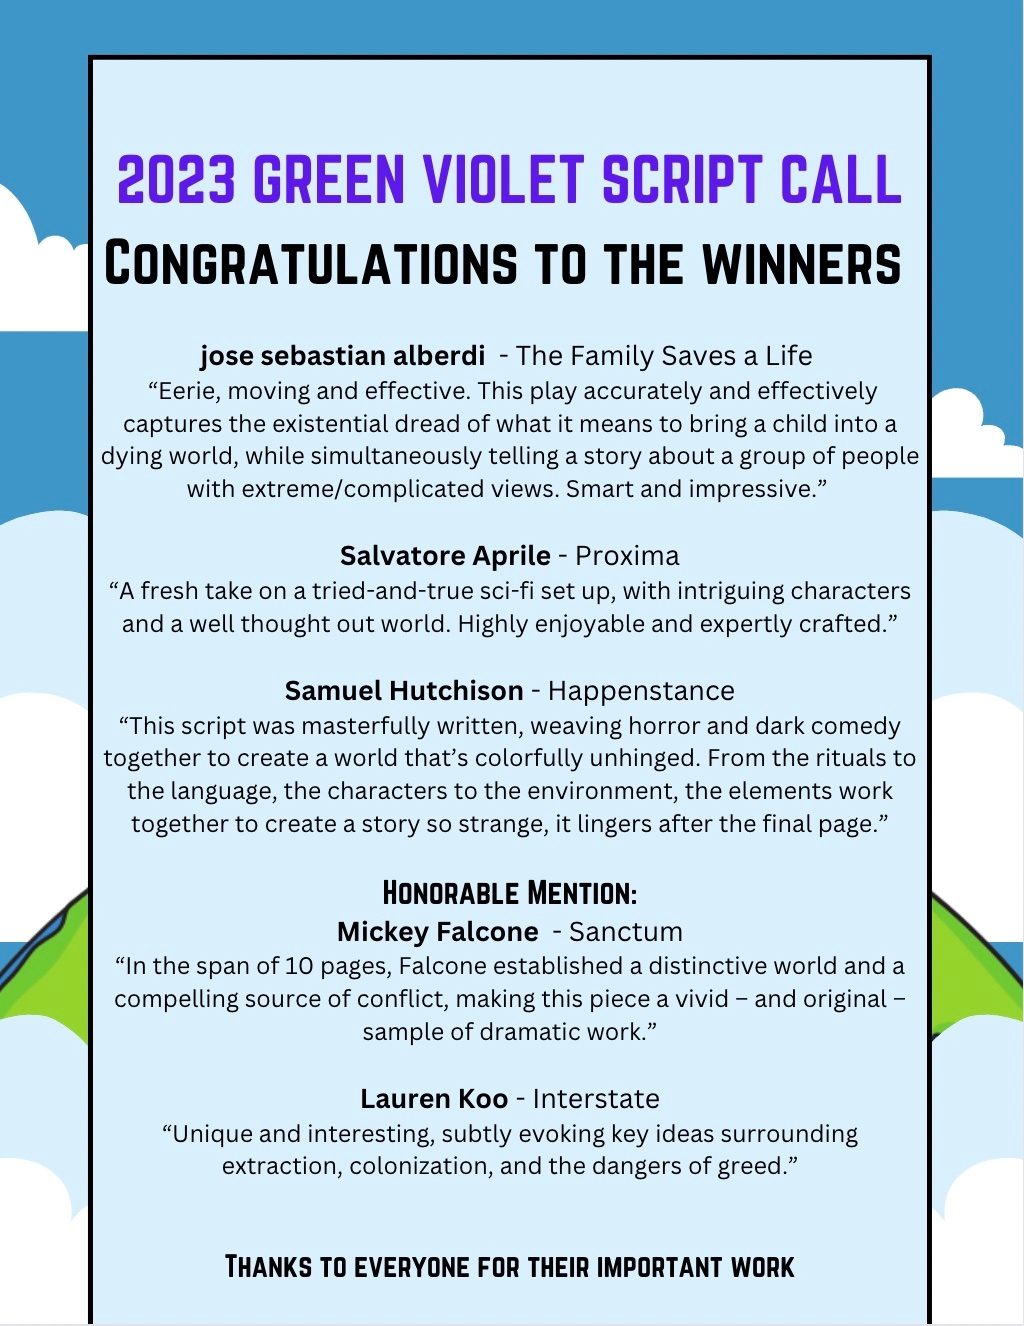 Green Violet Script Call Winners